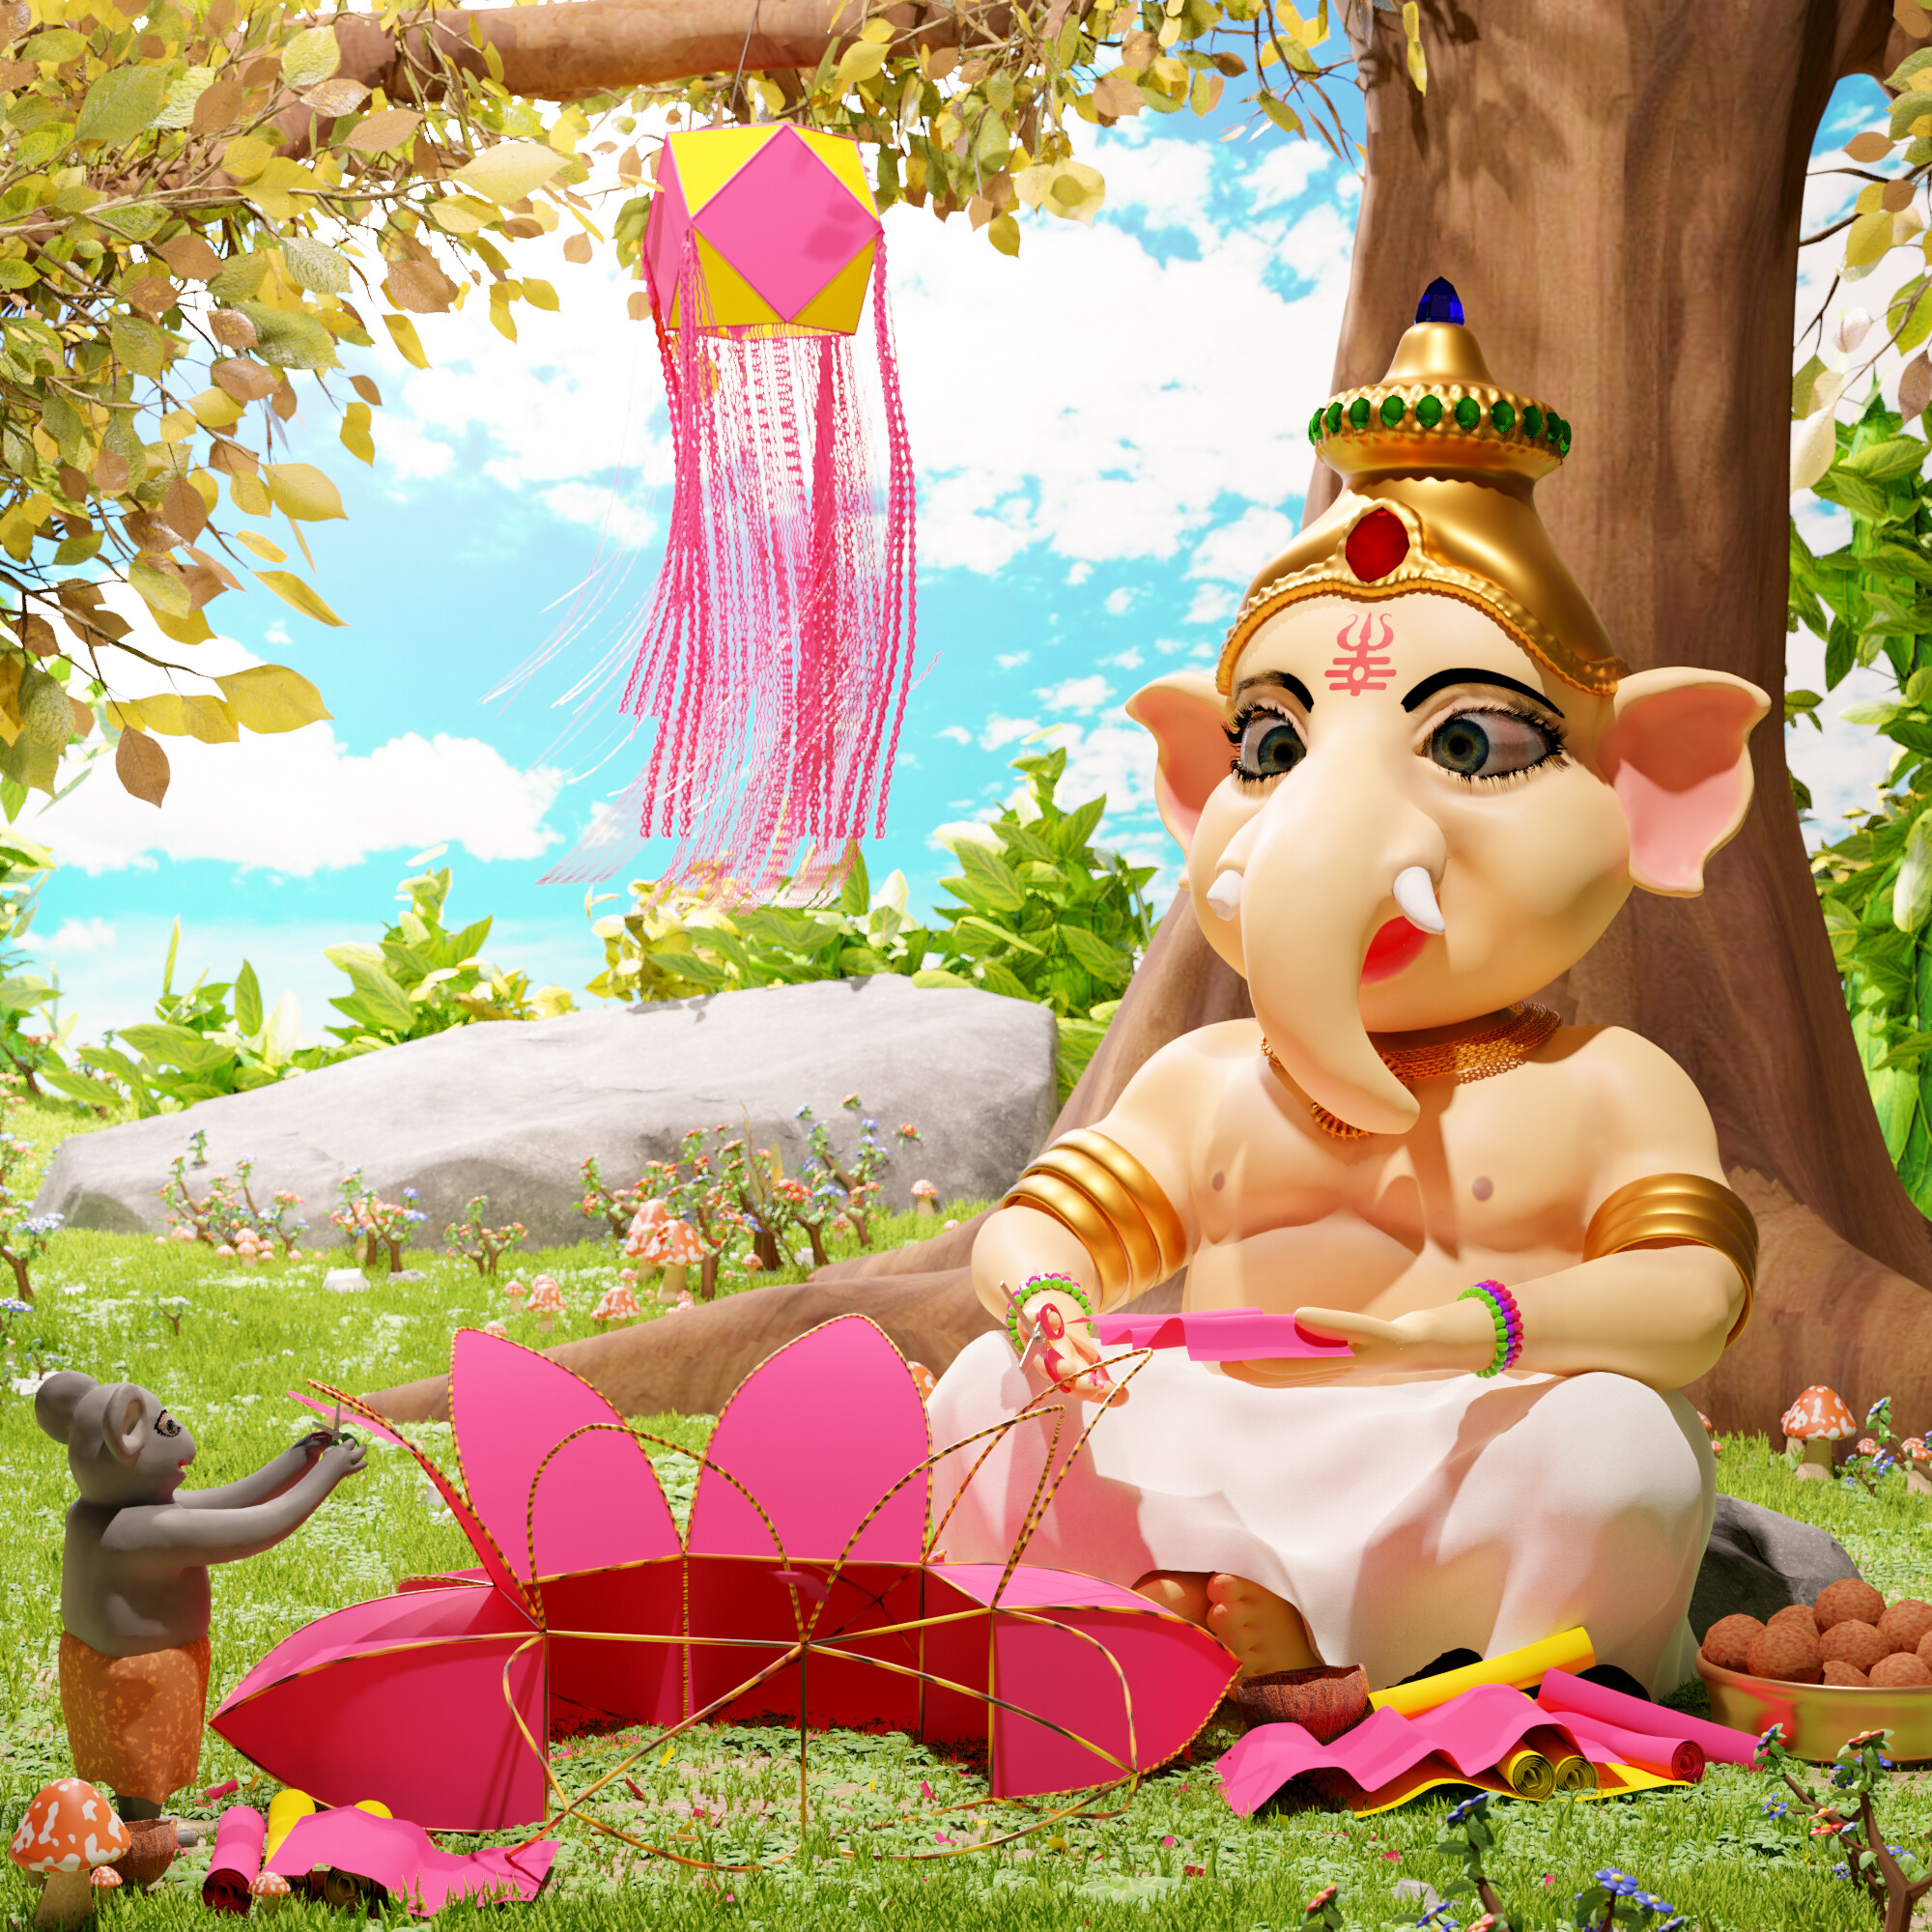 Lord Ganesha celebrates Vesak - Finished Projects - Blender Artists  Community